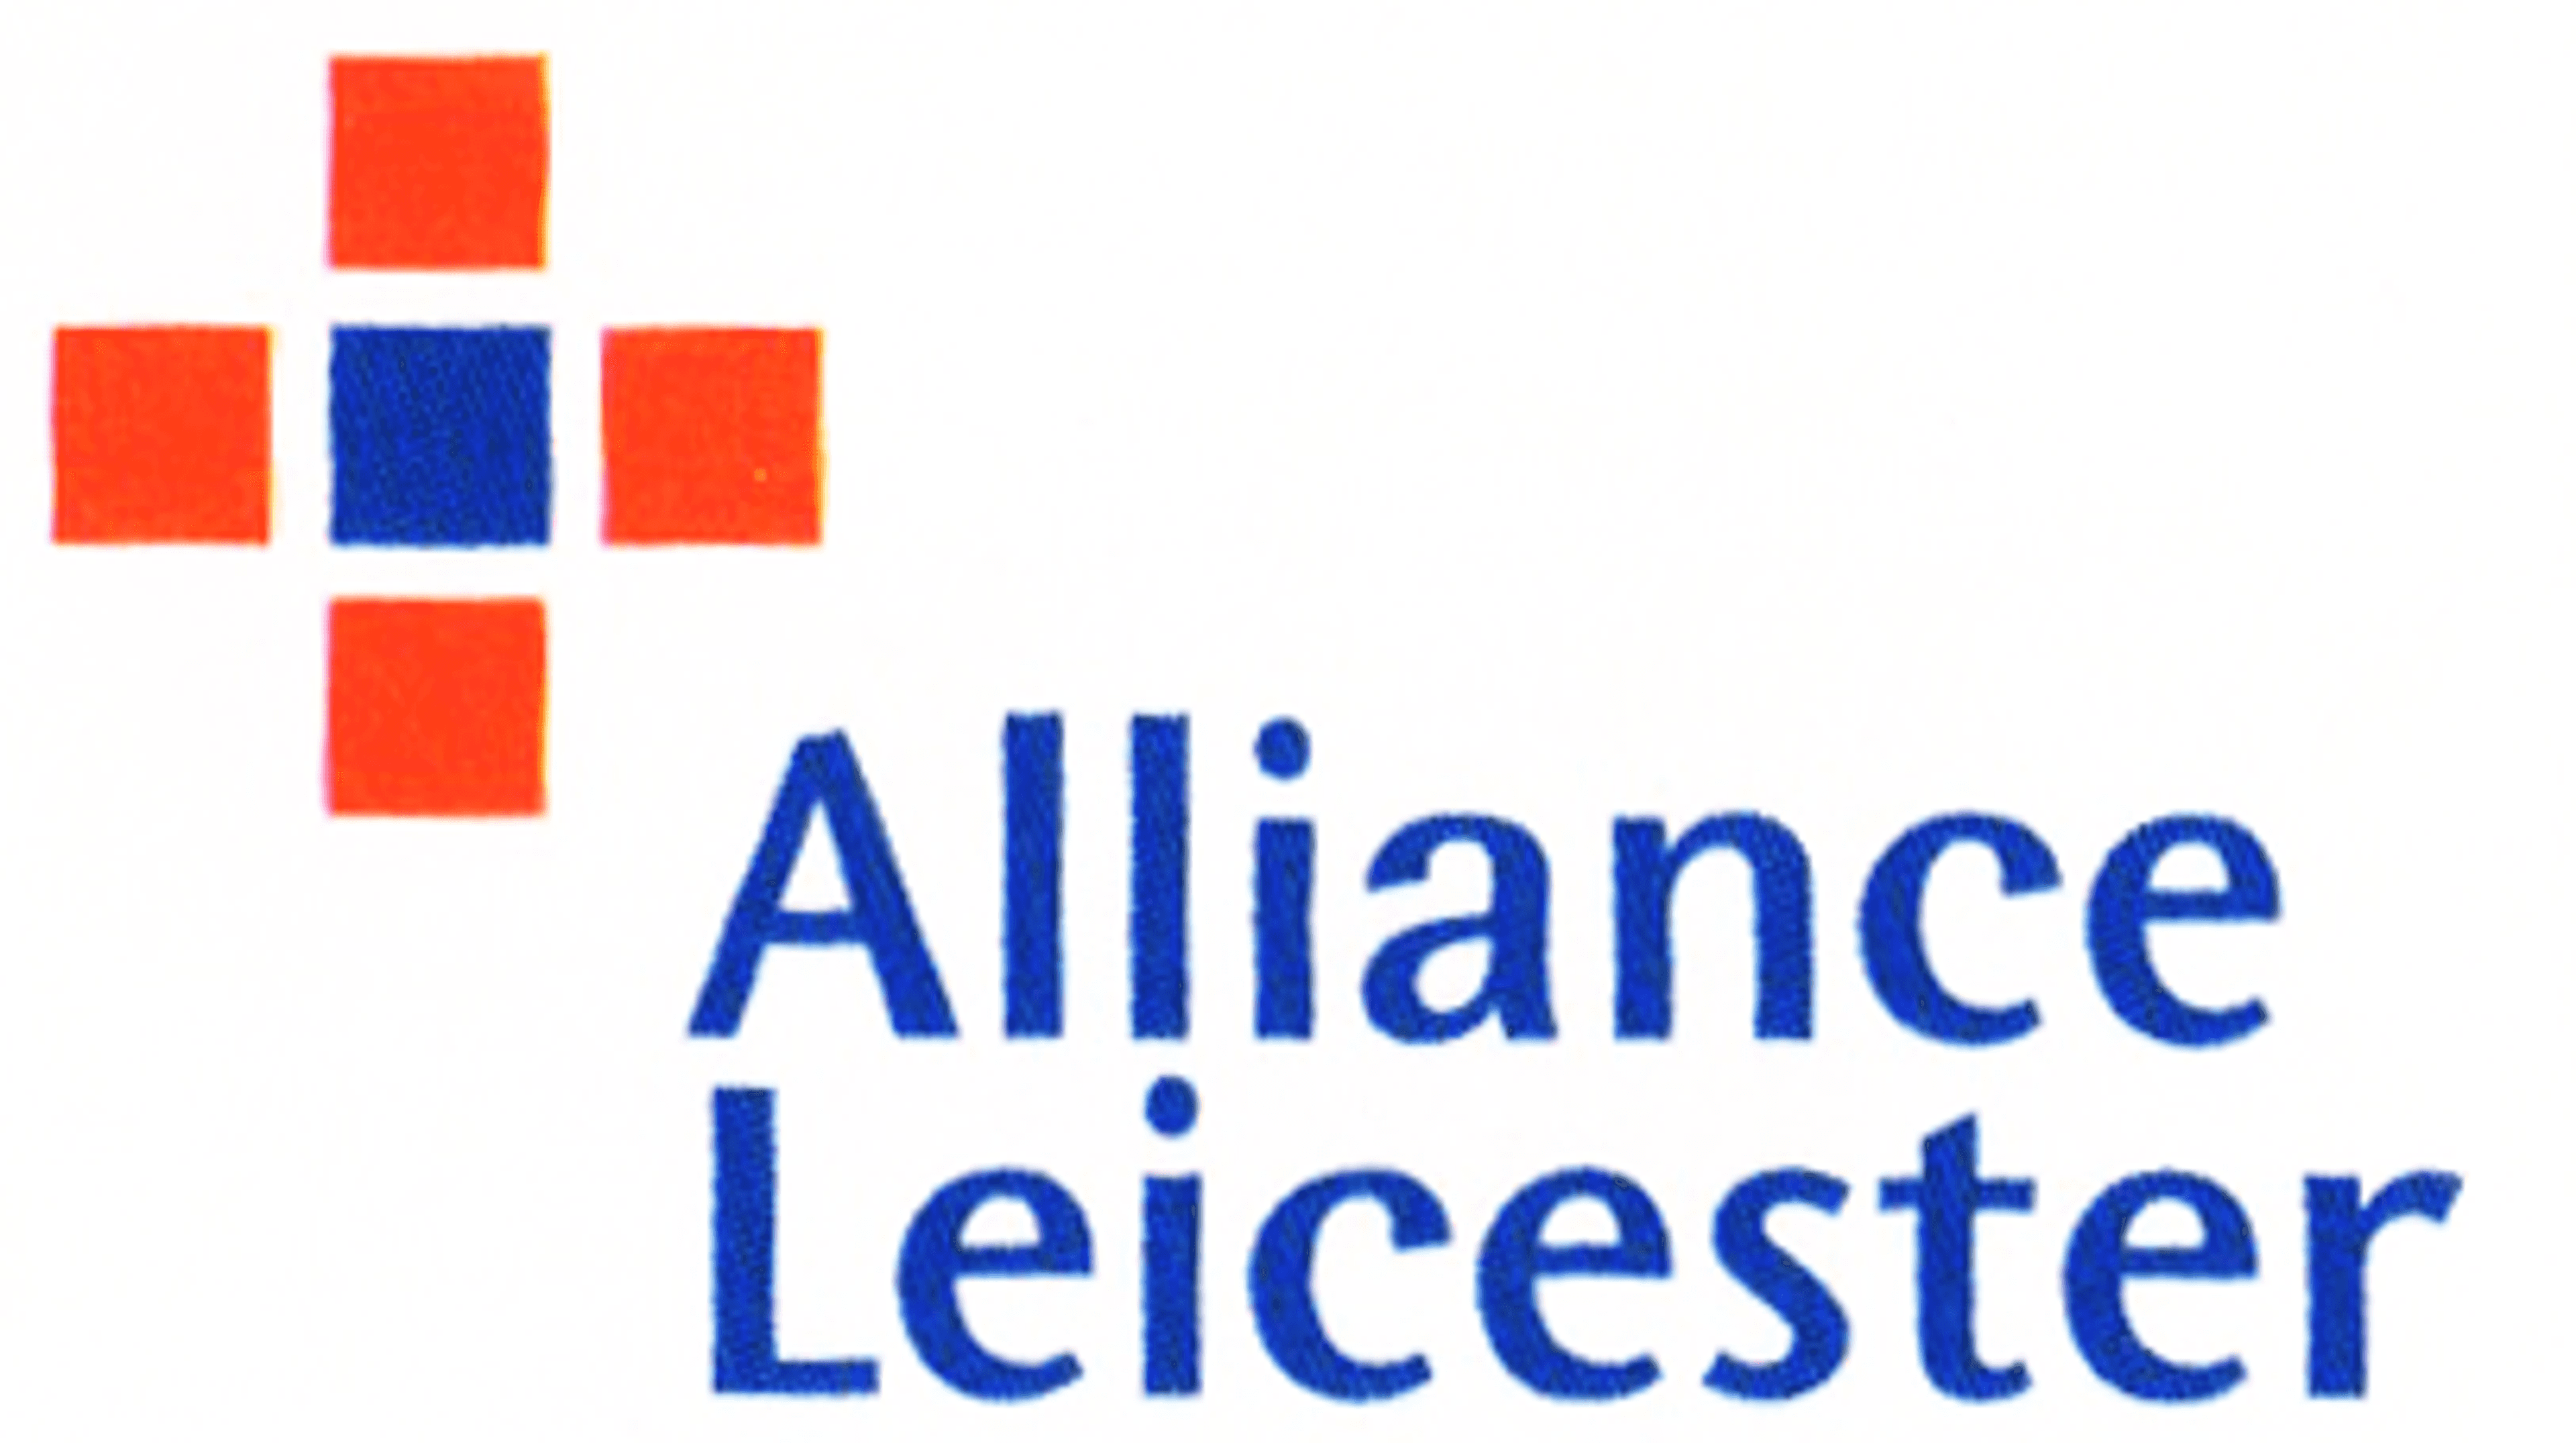 Alliance & Leicester logo